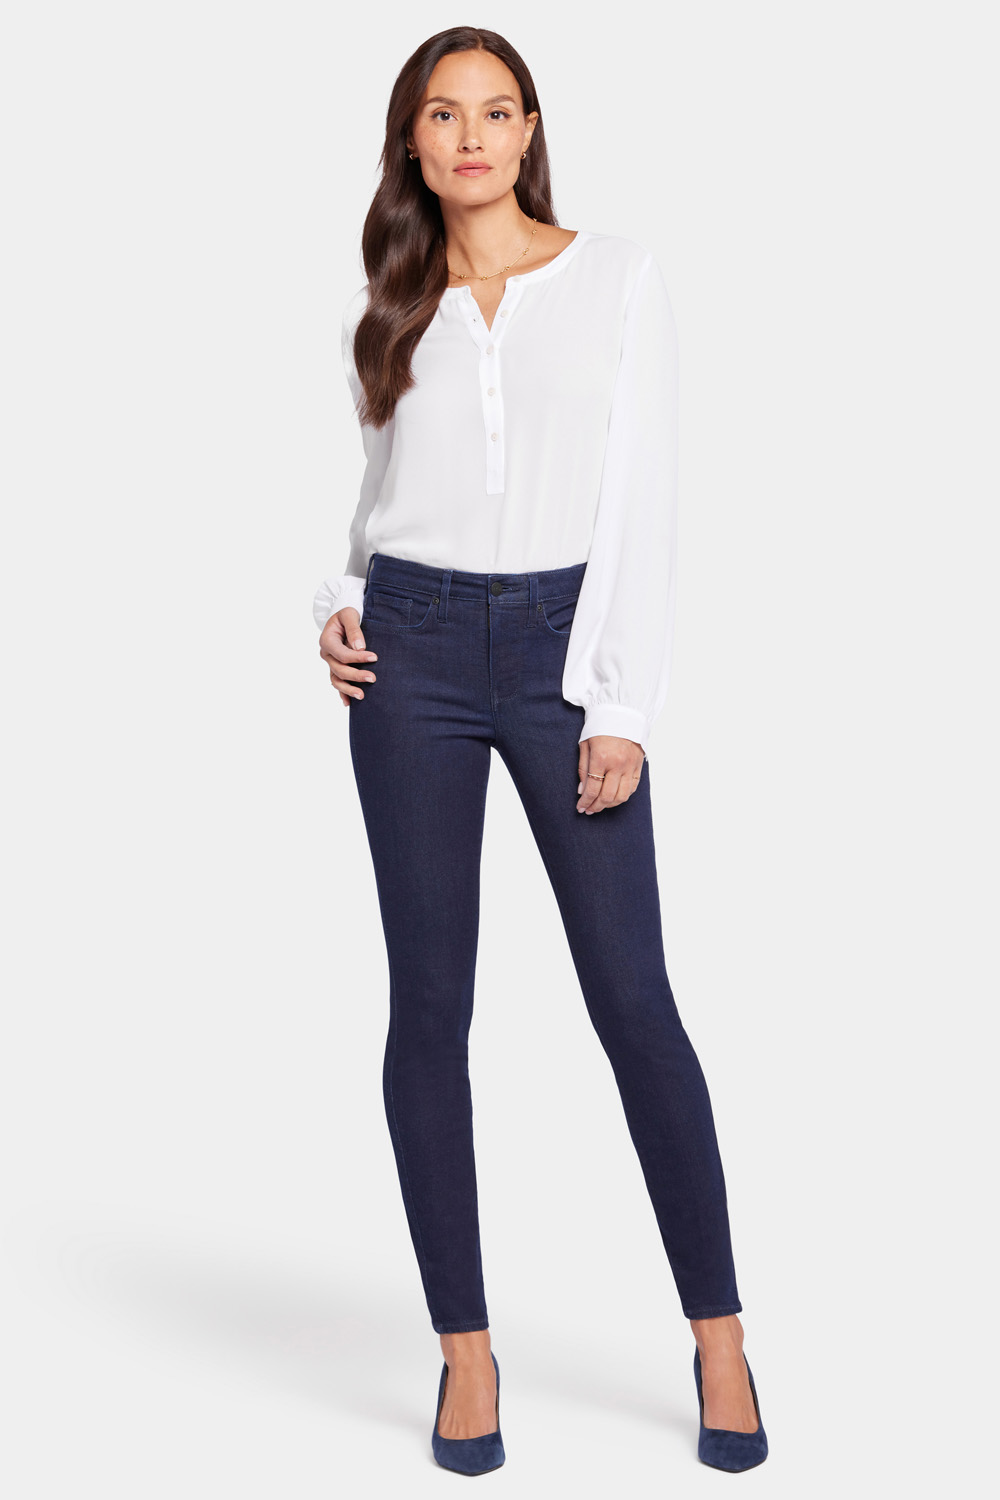 Women's Petite Jeans - Slim, Wide & Straight Petite | NYDJ Apparel